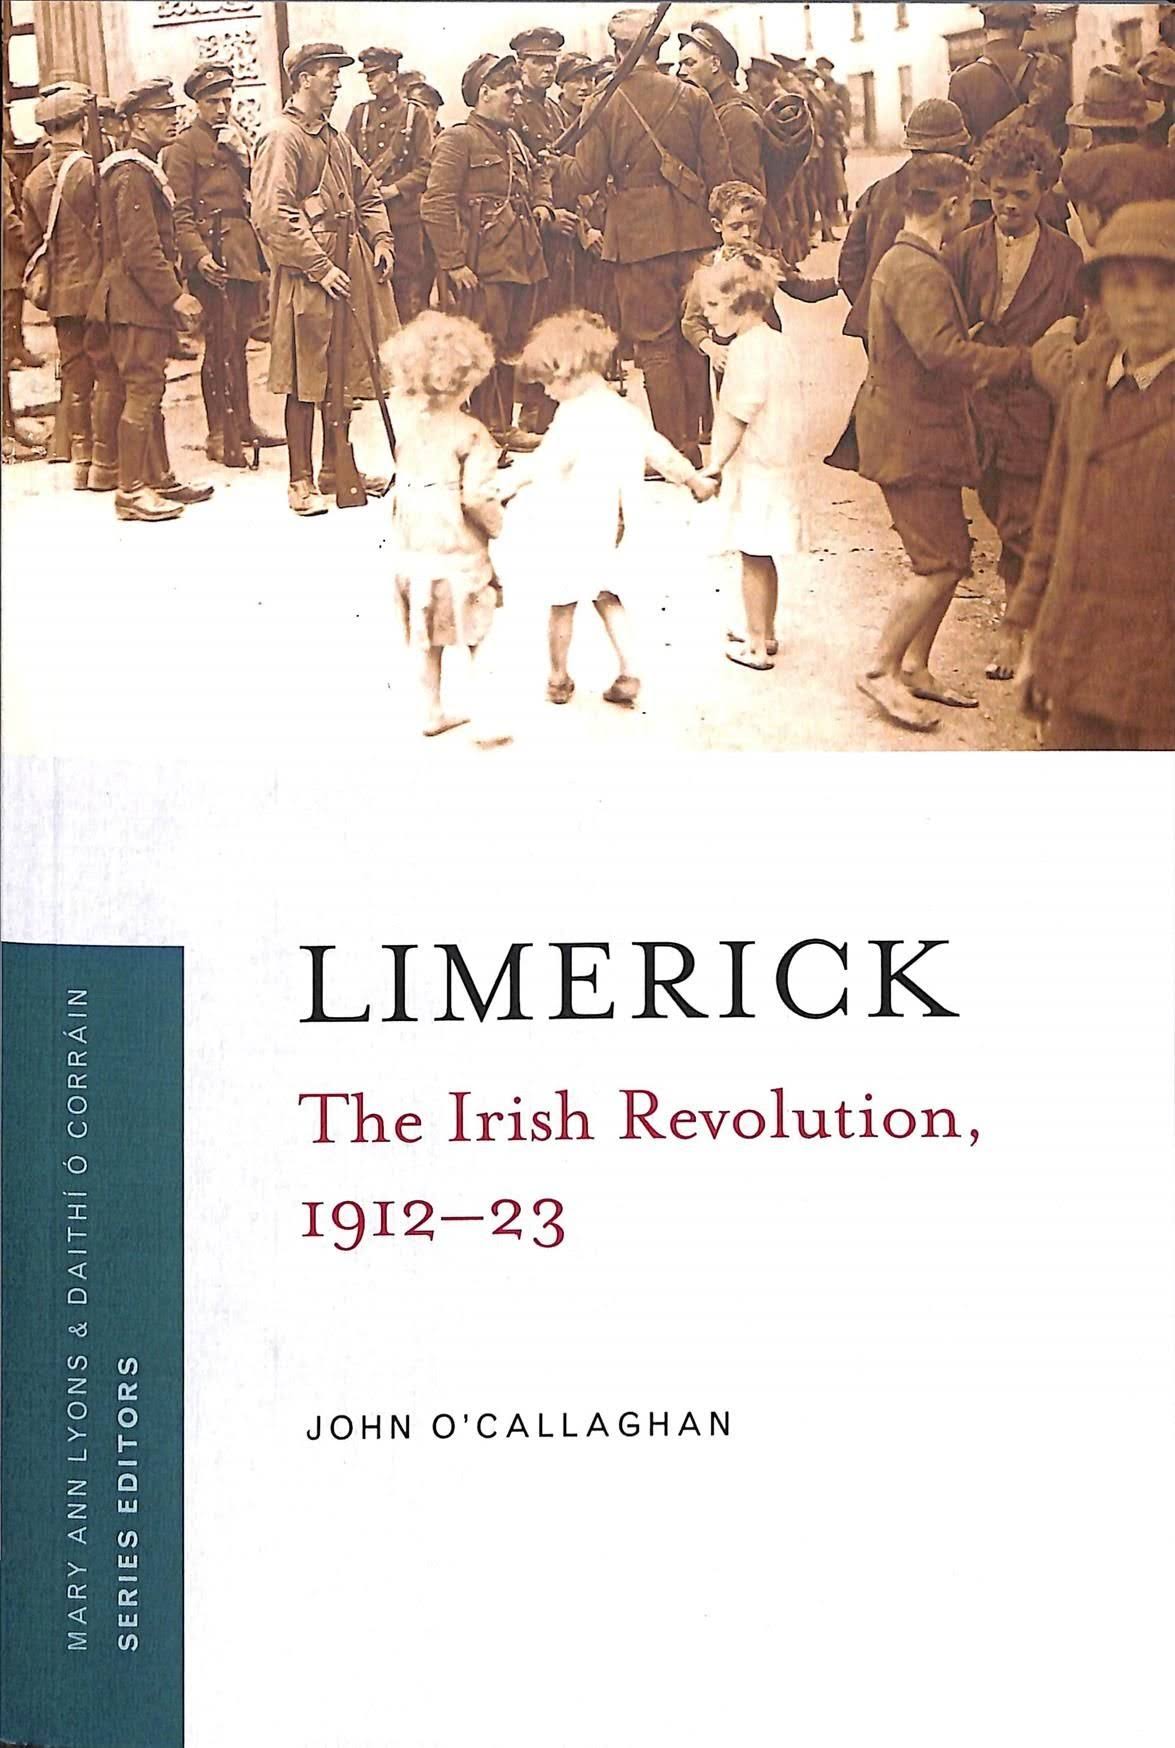 Limerick by John O'Callaghan